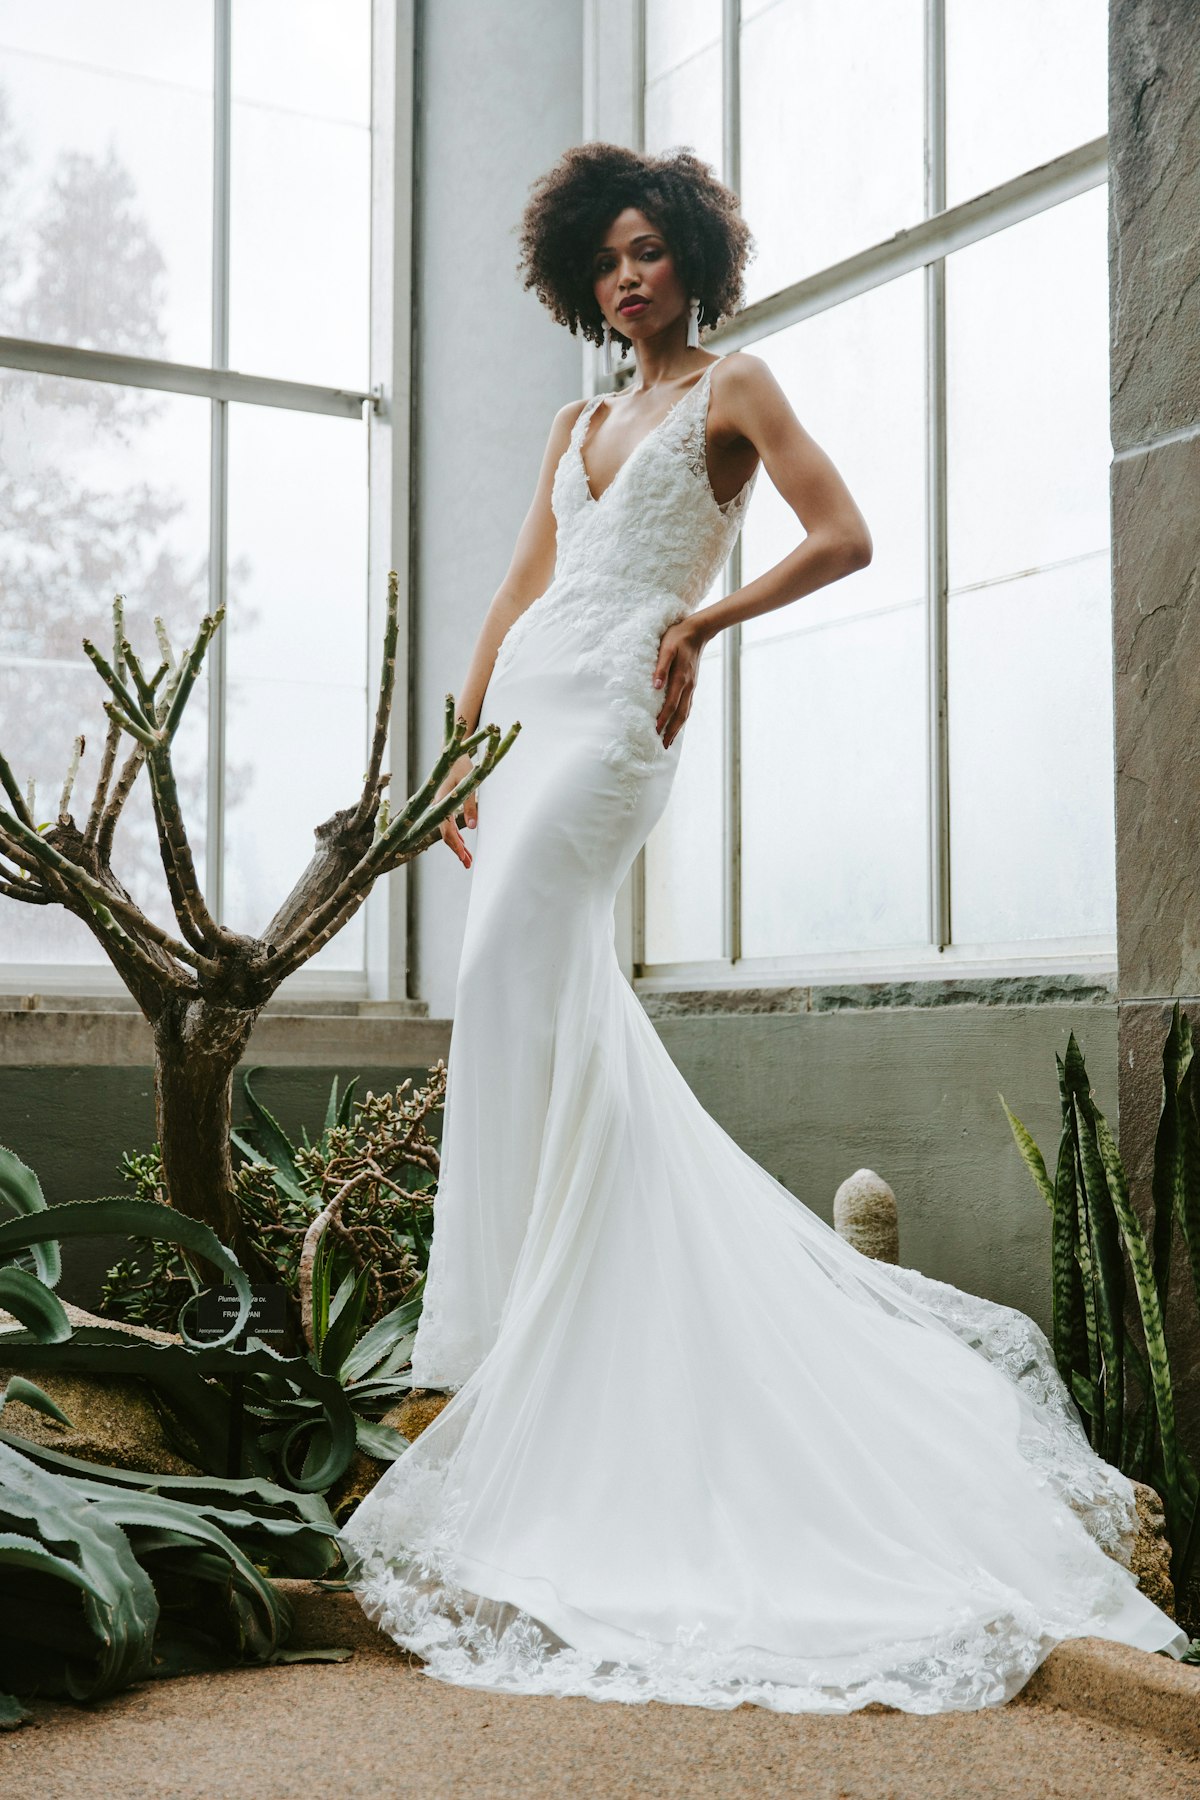 Wedding Gowns - Bridal Store vs Custom Made